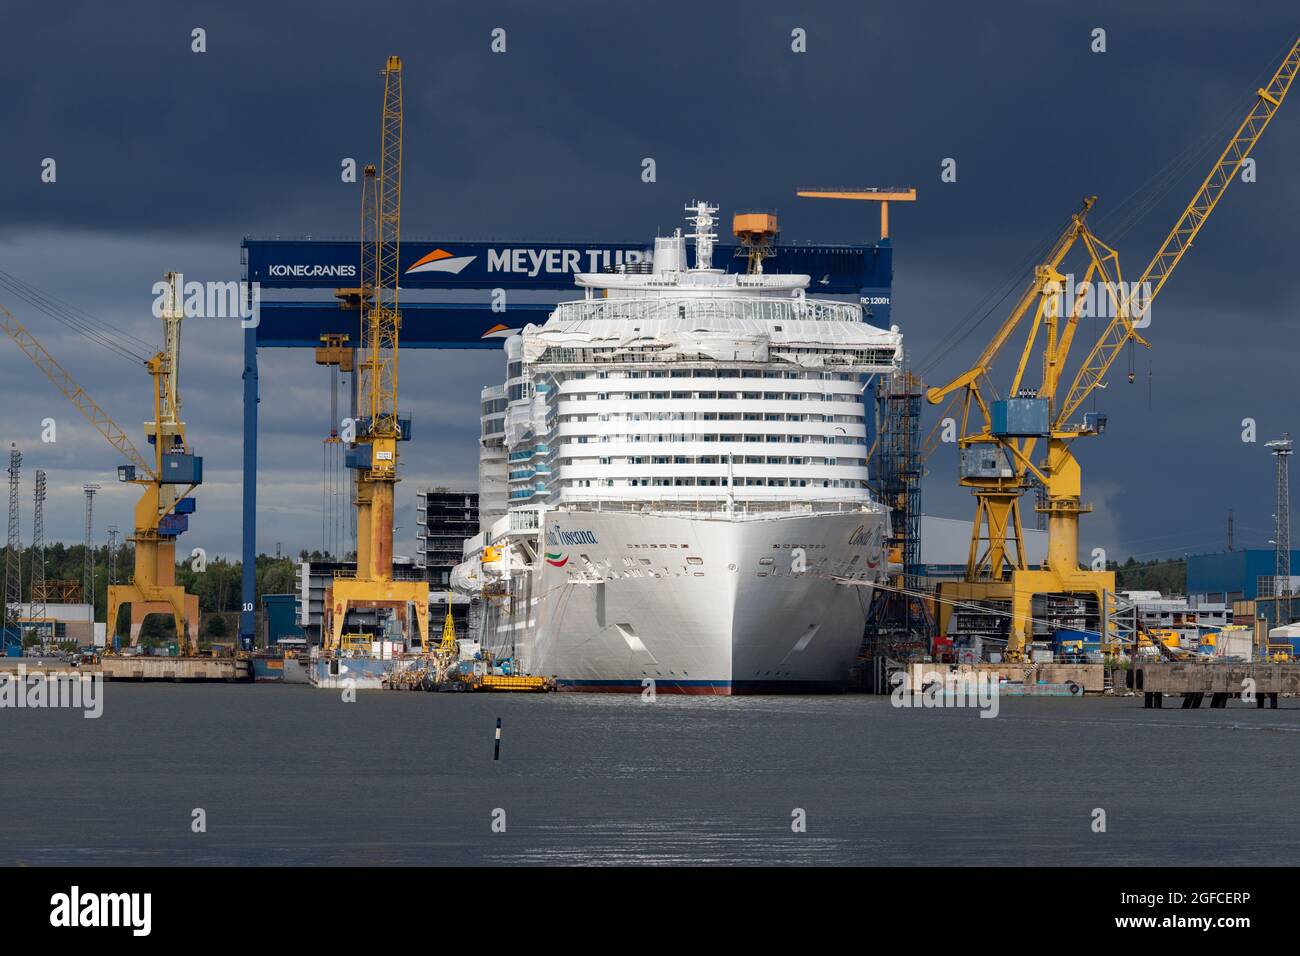 Costa Toscana under construction at Meyer Turku Shipyard on August 21, 2021. Stock Photo